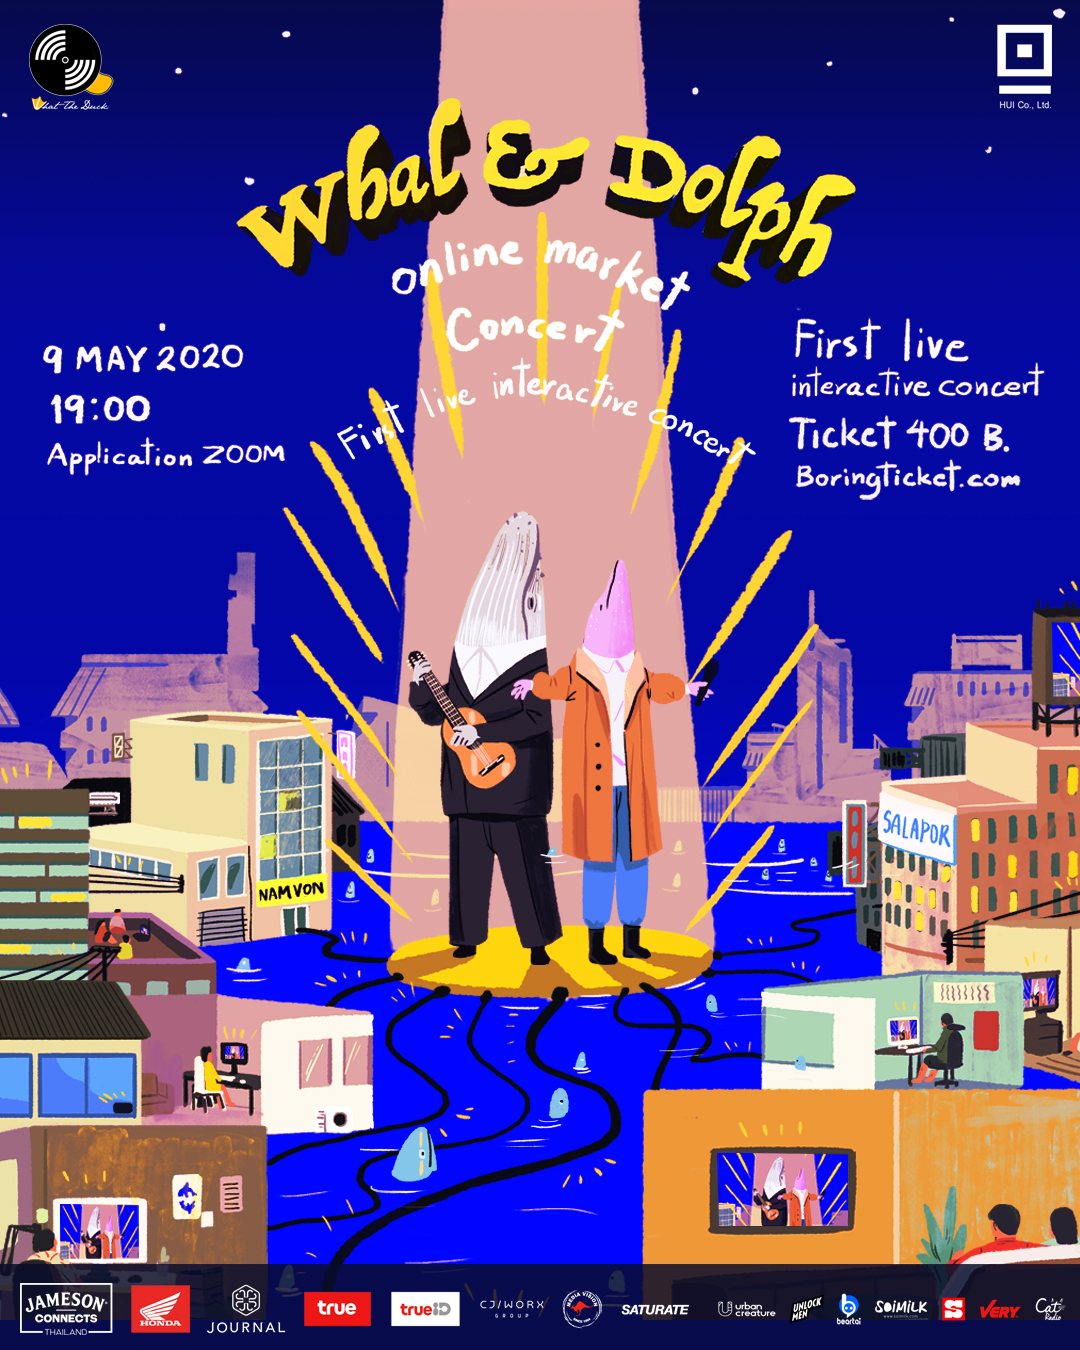 What The Duck ผุดไอเดีย จัด concert รูปแบบใหม่ ครั้งแรกในเมืองไทย กับ Whal Dolph Online Market Concert